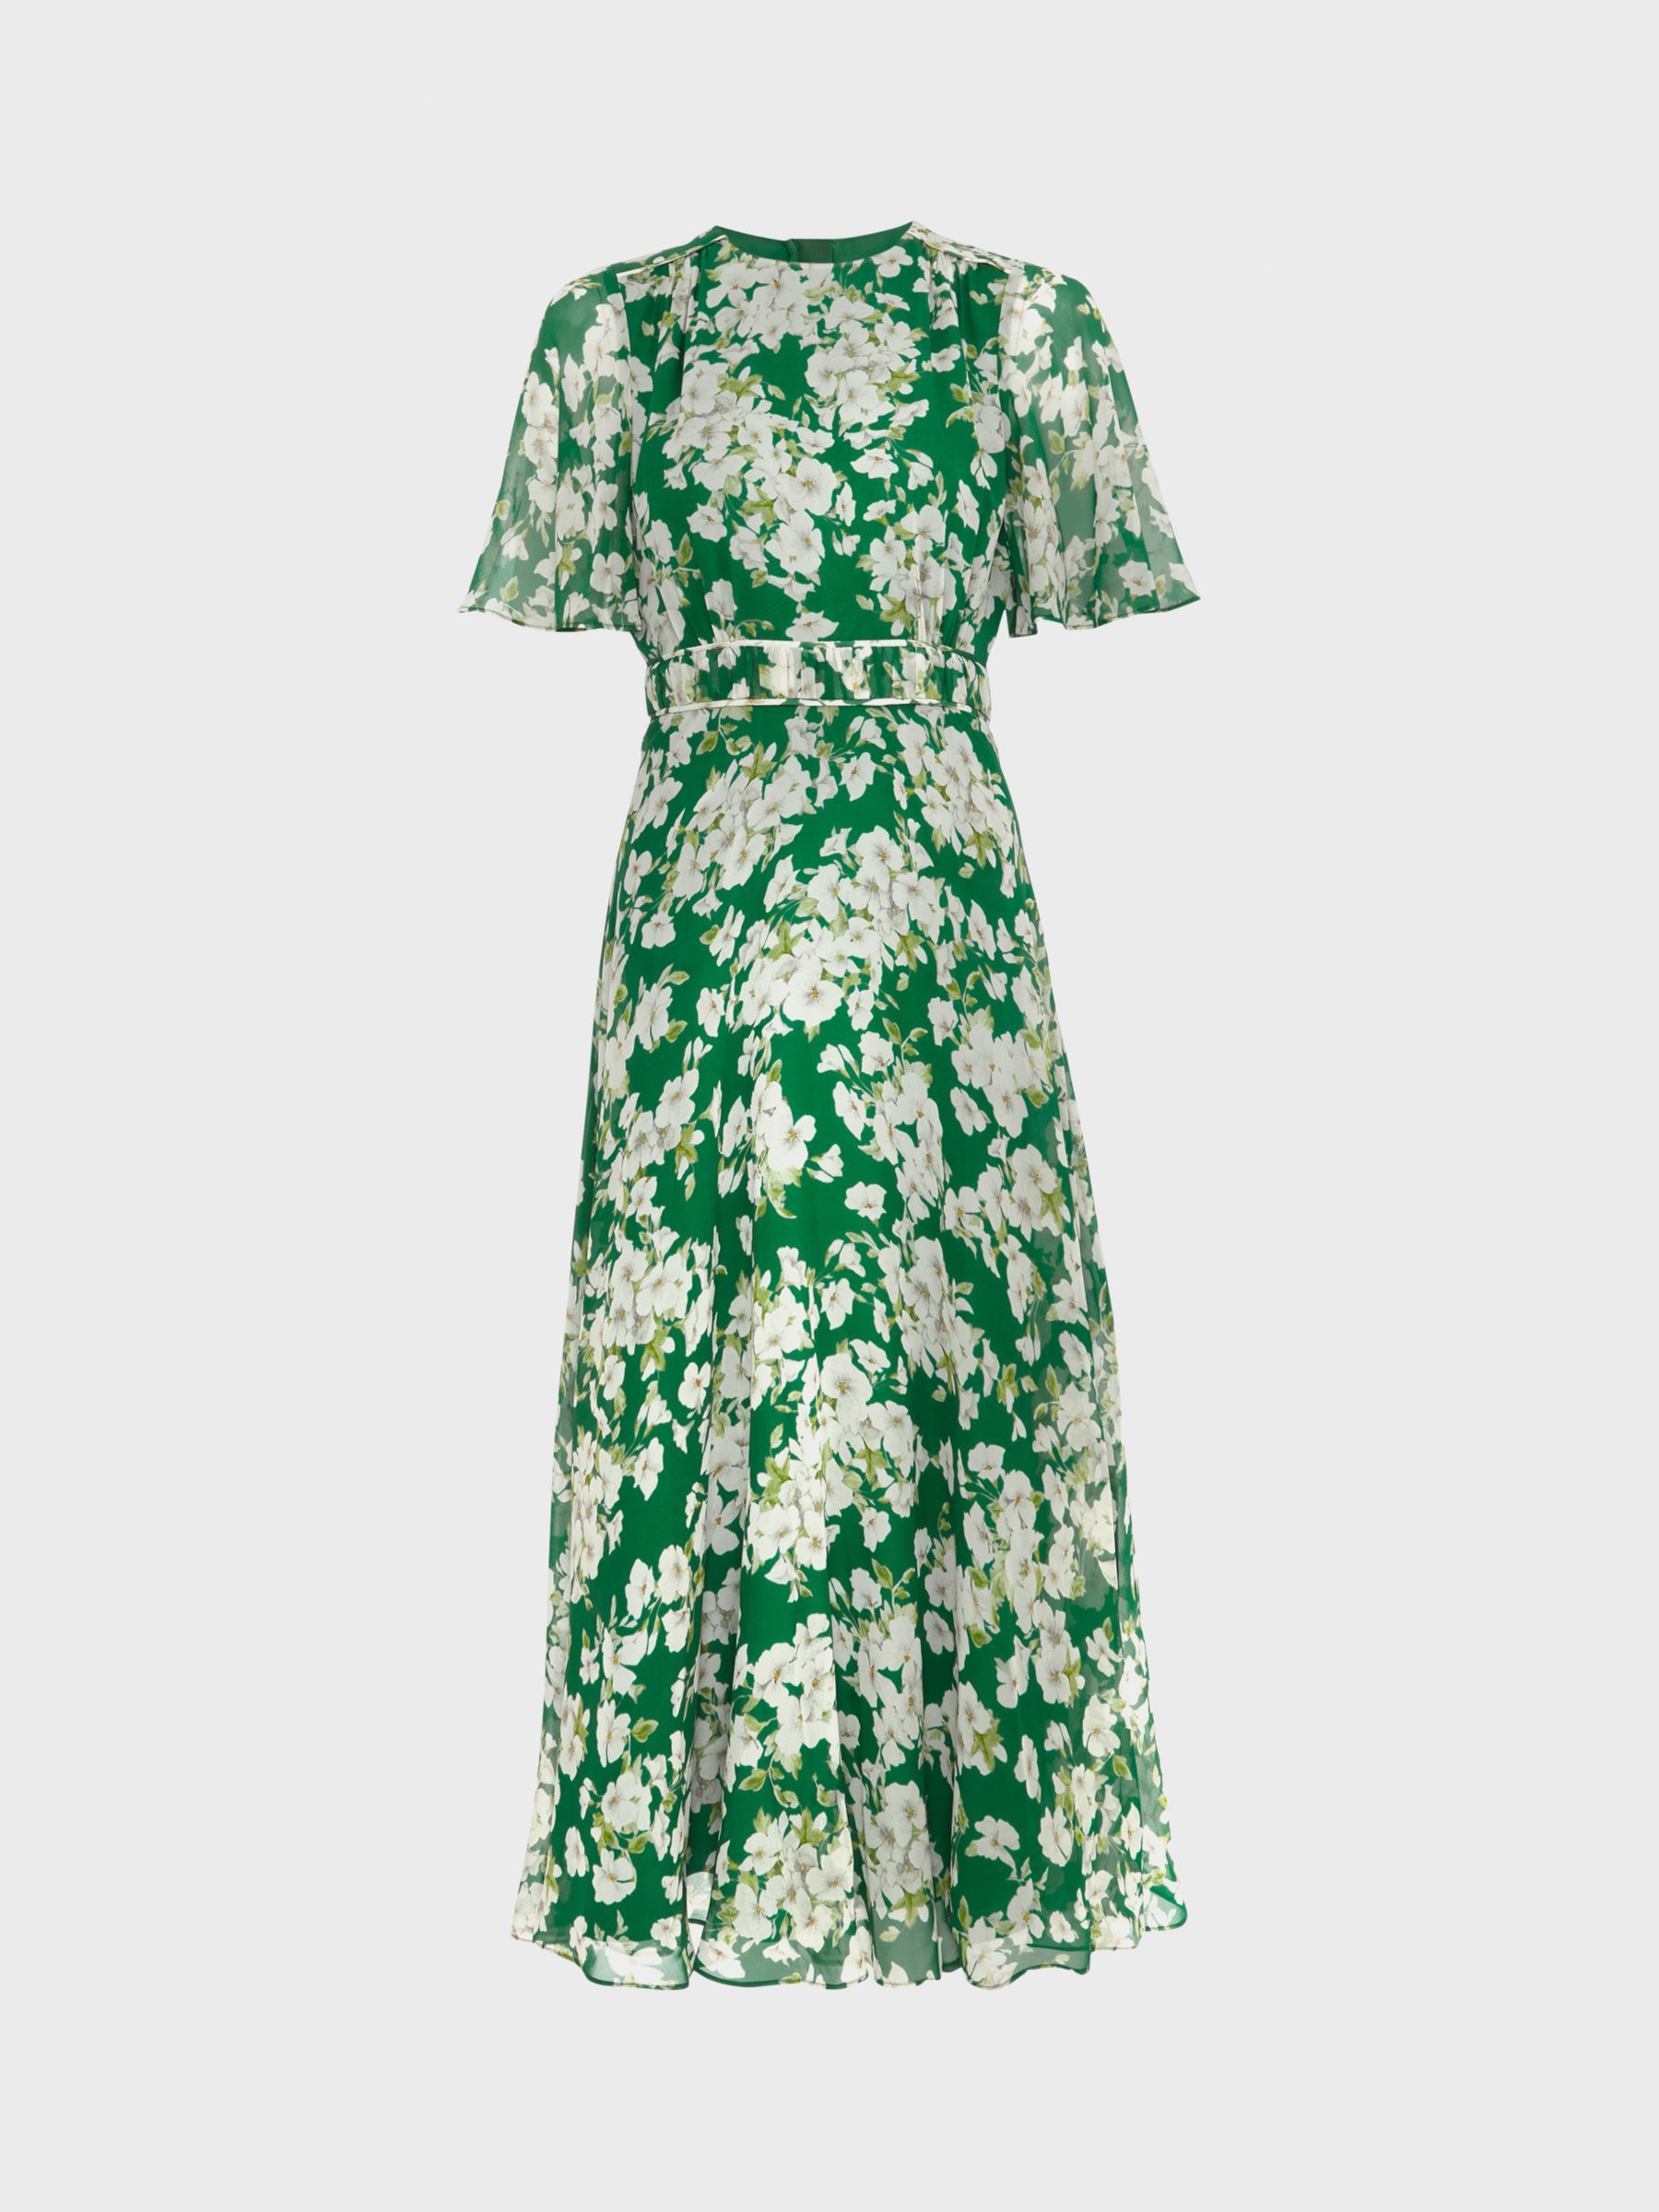 Hobbs Bronwyn Floral Print Silk Midi Dress, Green/Multi, 10